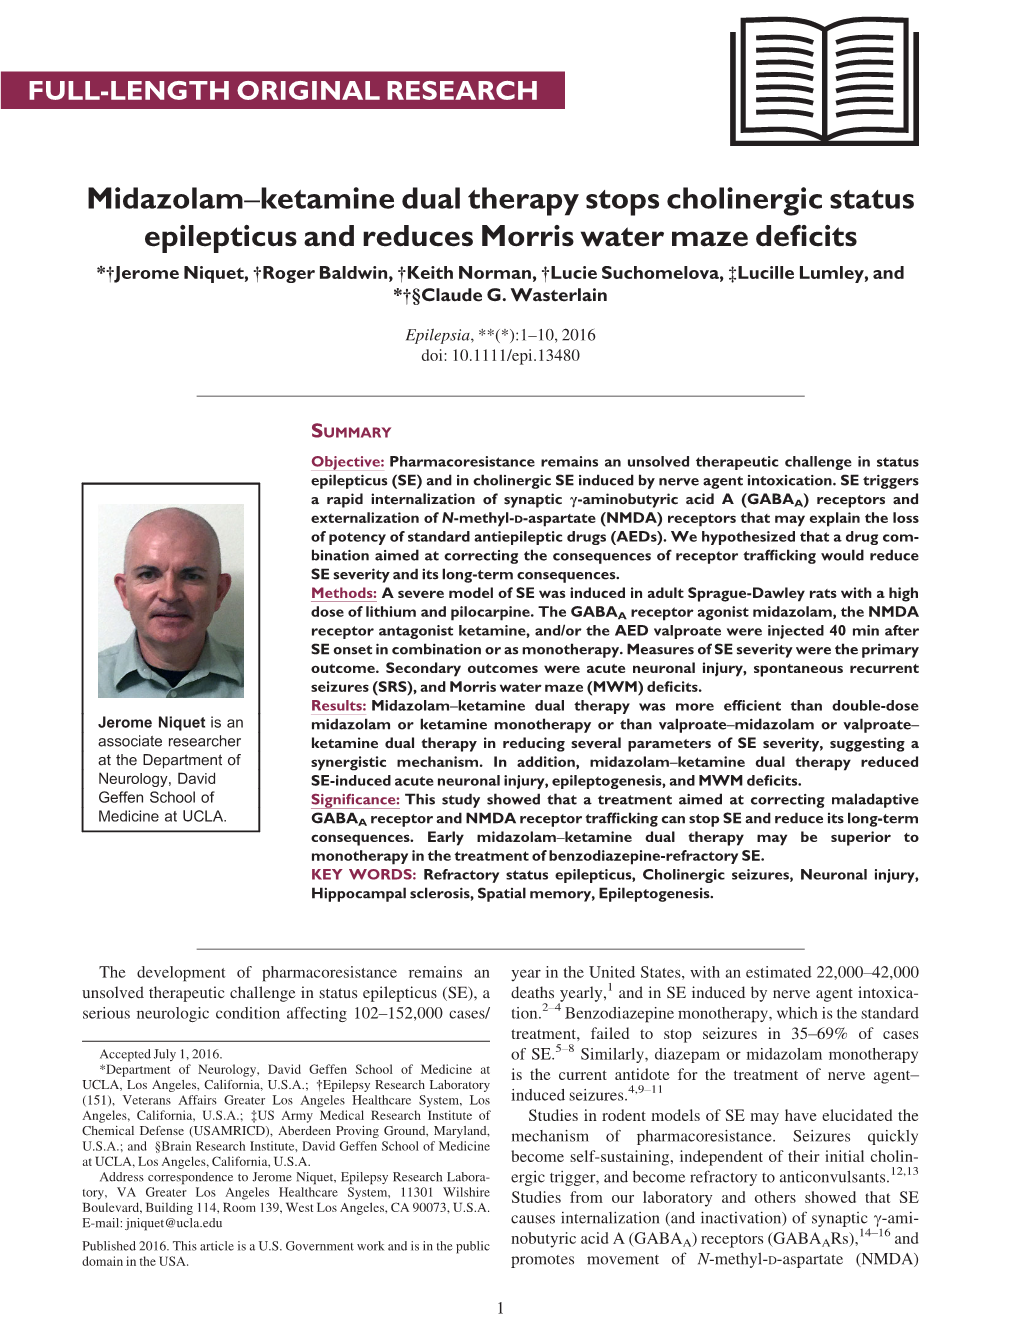 Ketamine Dual Therapy Stops Cholinergic Status